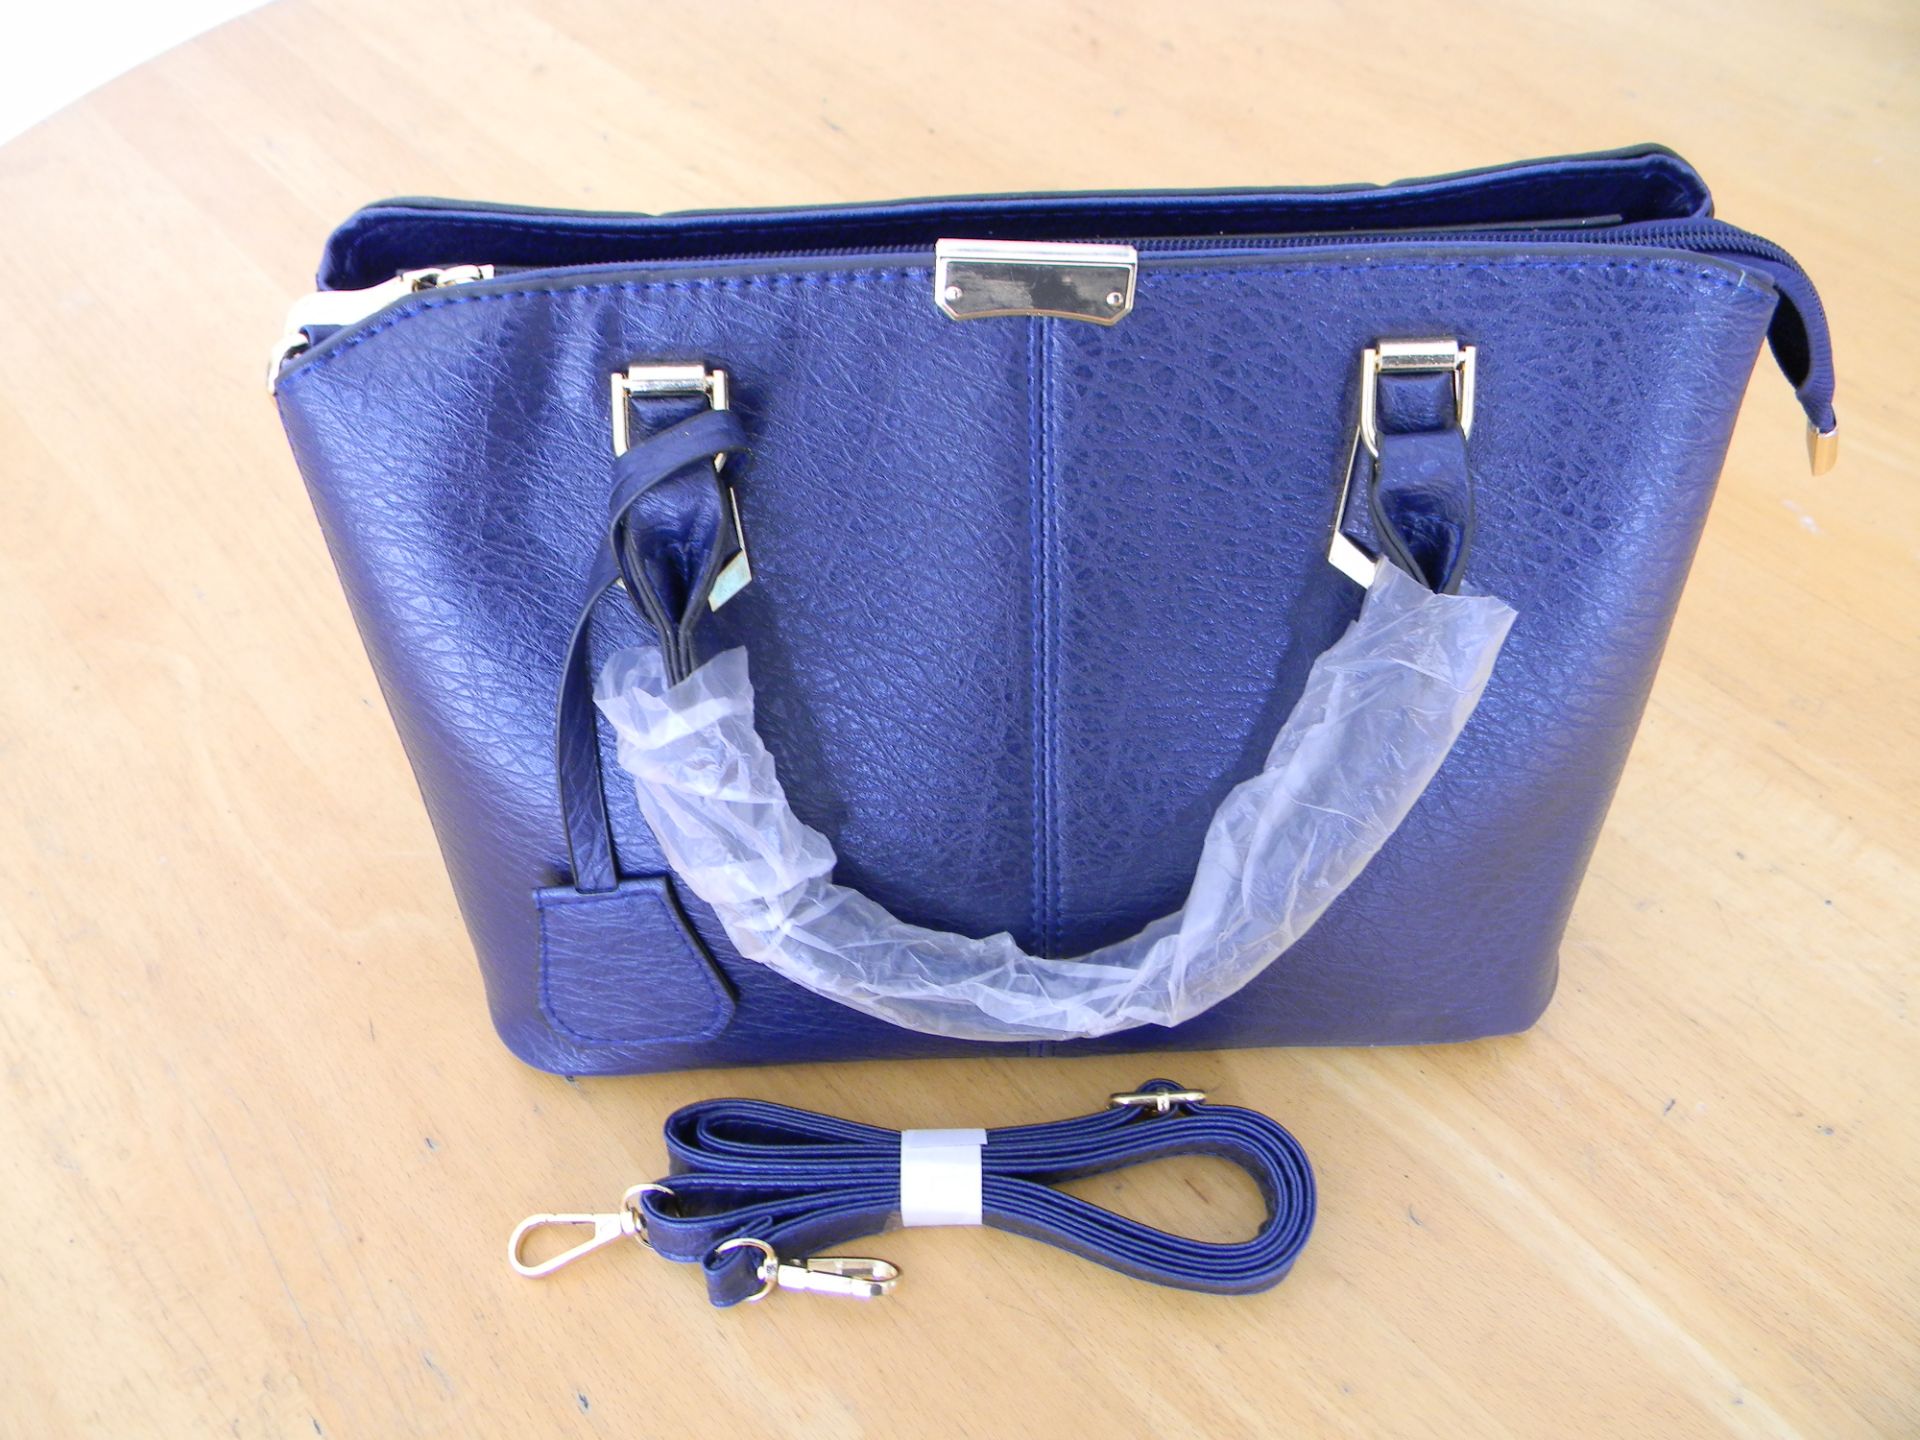 Black Top handle satchel bags for ladies set vegan leather hand bag/purse/wallet/card holder - Image 2 of 3